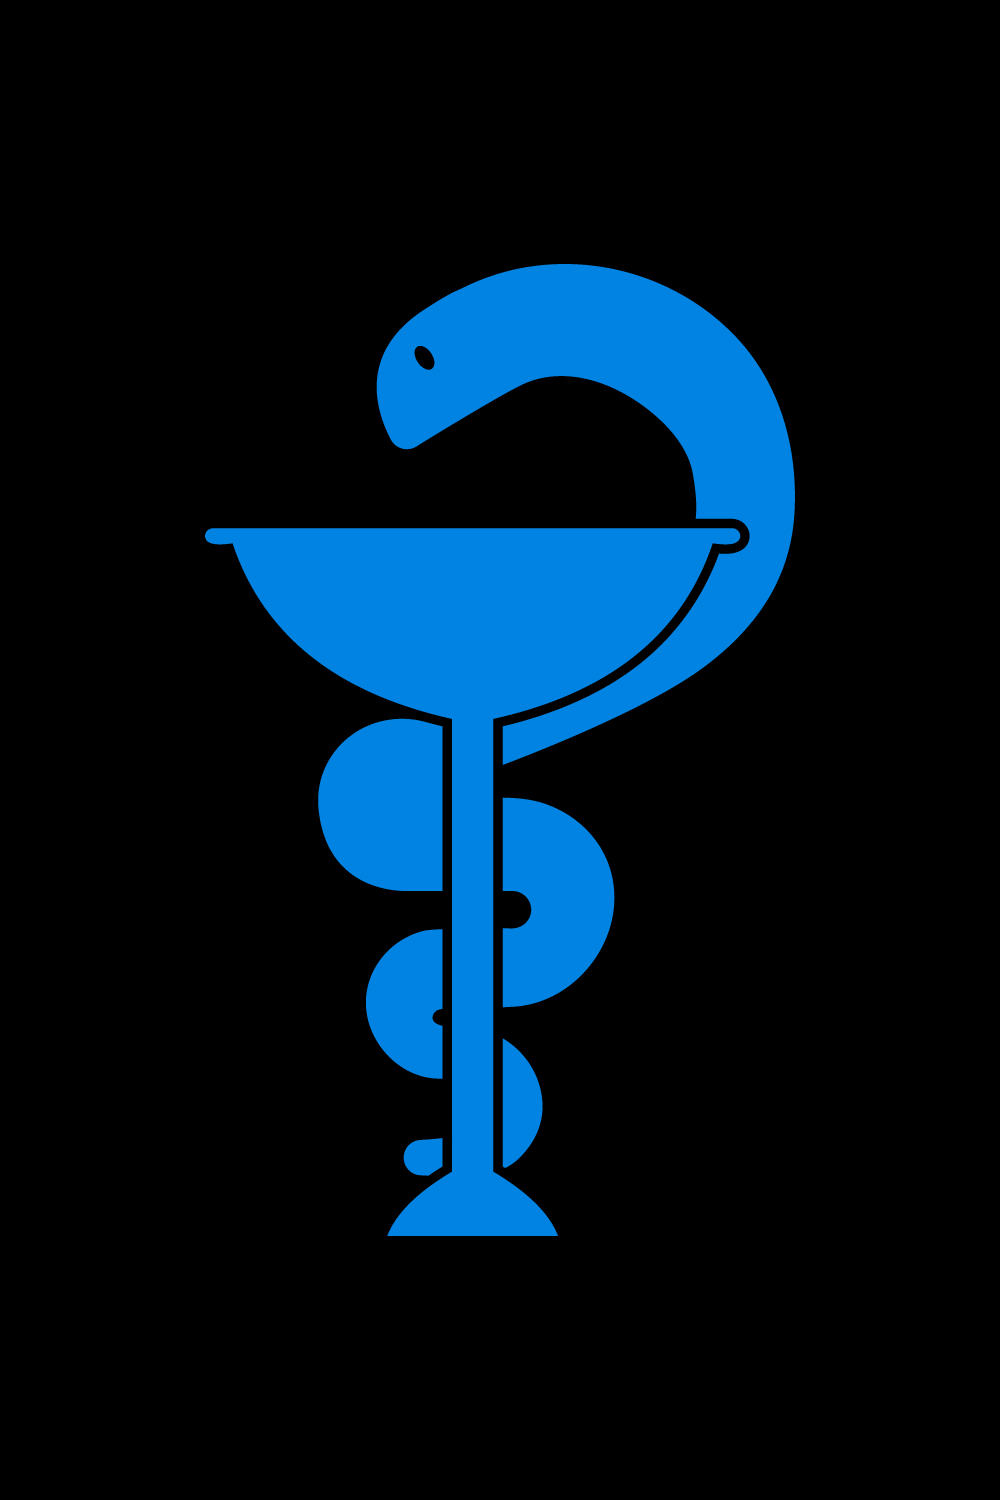 Creative Medical pharmacy logo design, Vector design concept pinterest preview image.